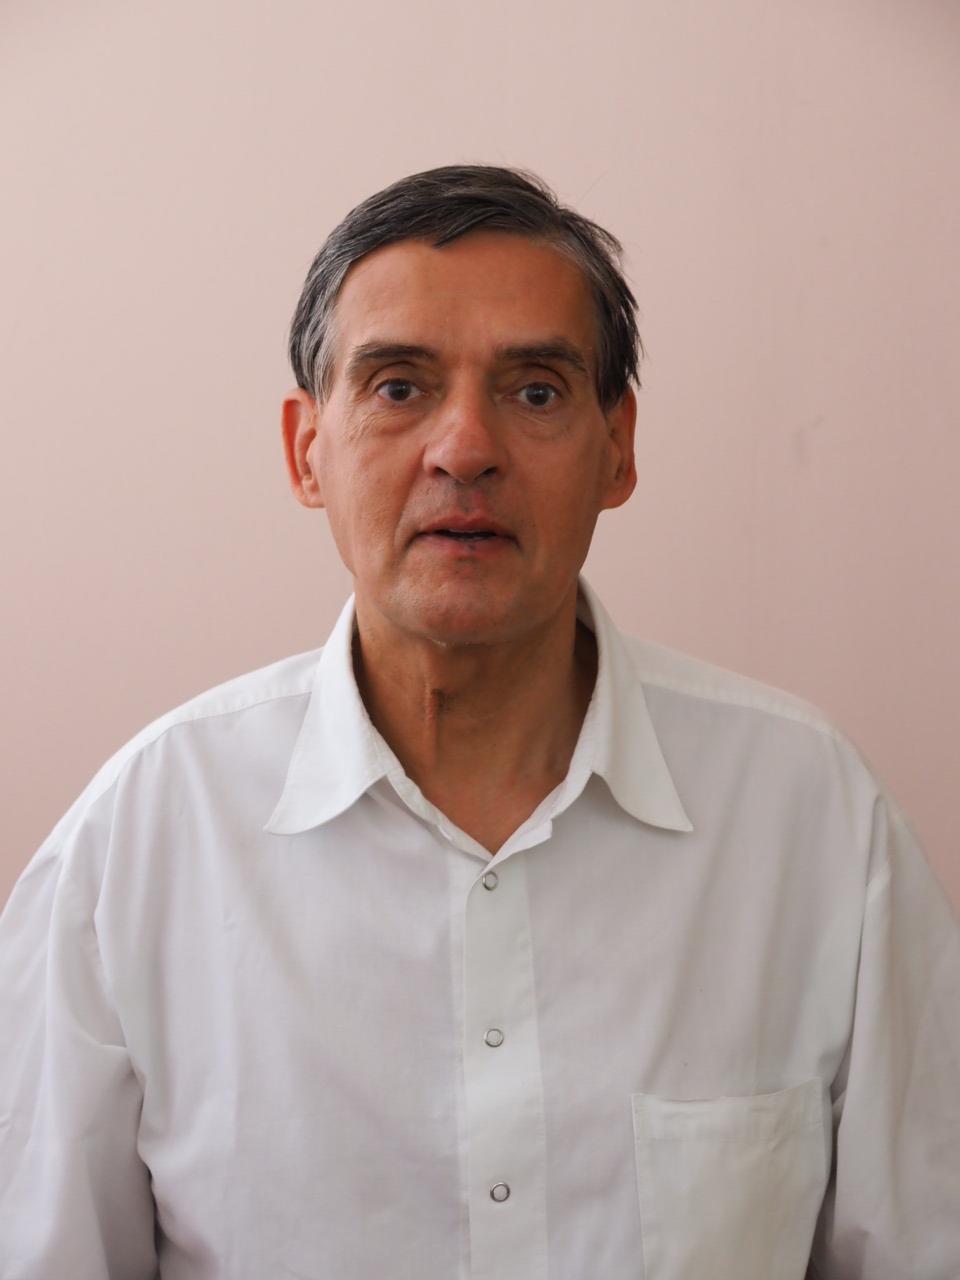 Dr. Papp Gábor